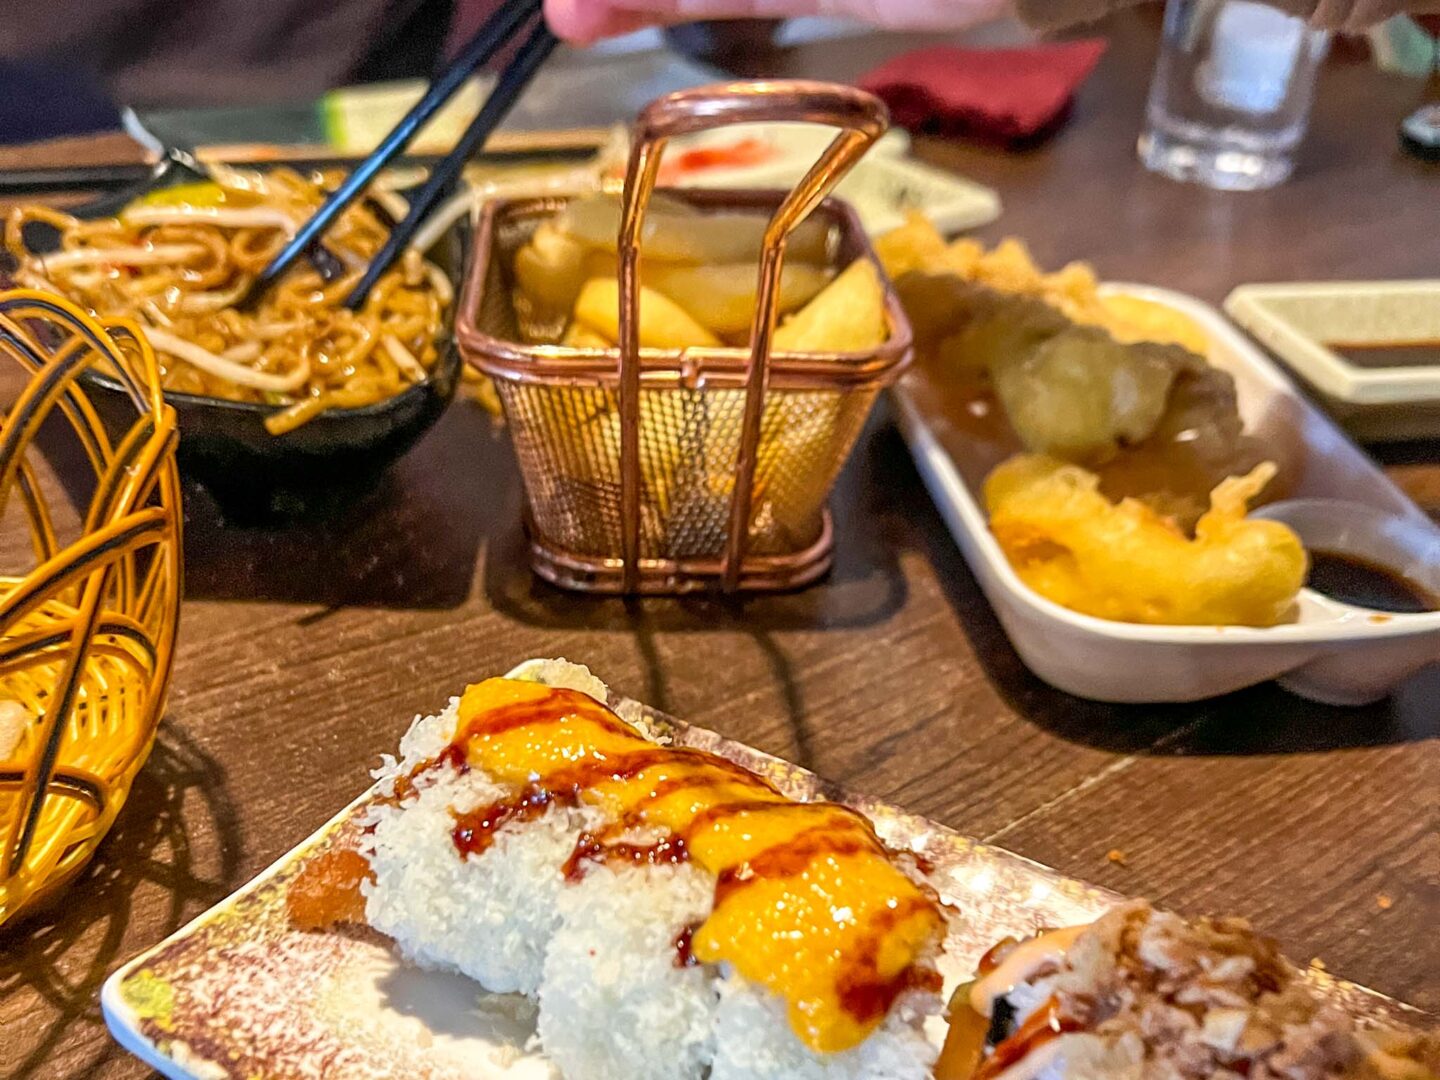 halal restaurants in manchester, sushi and noodles at Sakura Japanese Restaurant Manchester